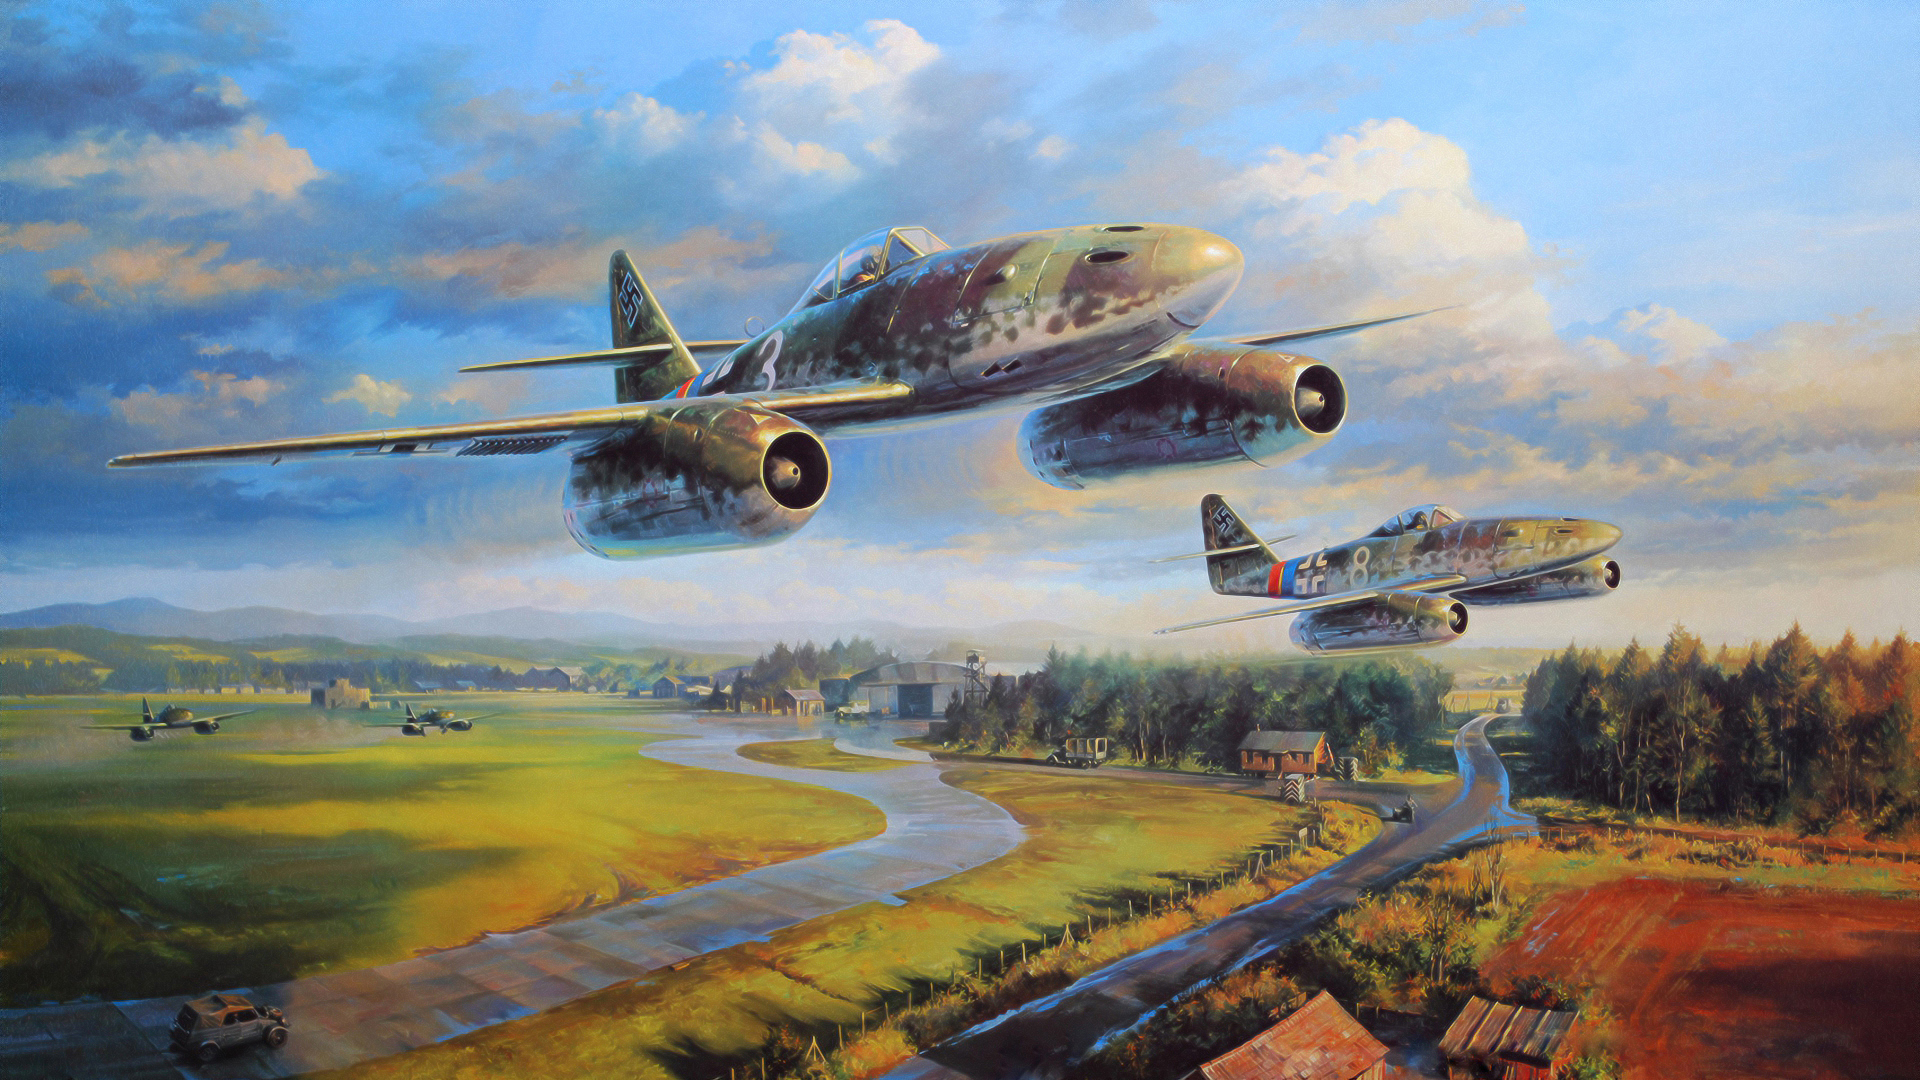 Wallpaper Me Ww2 War Aviation